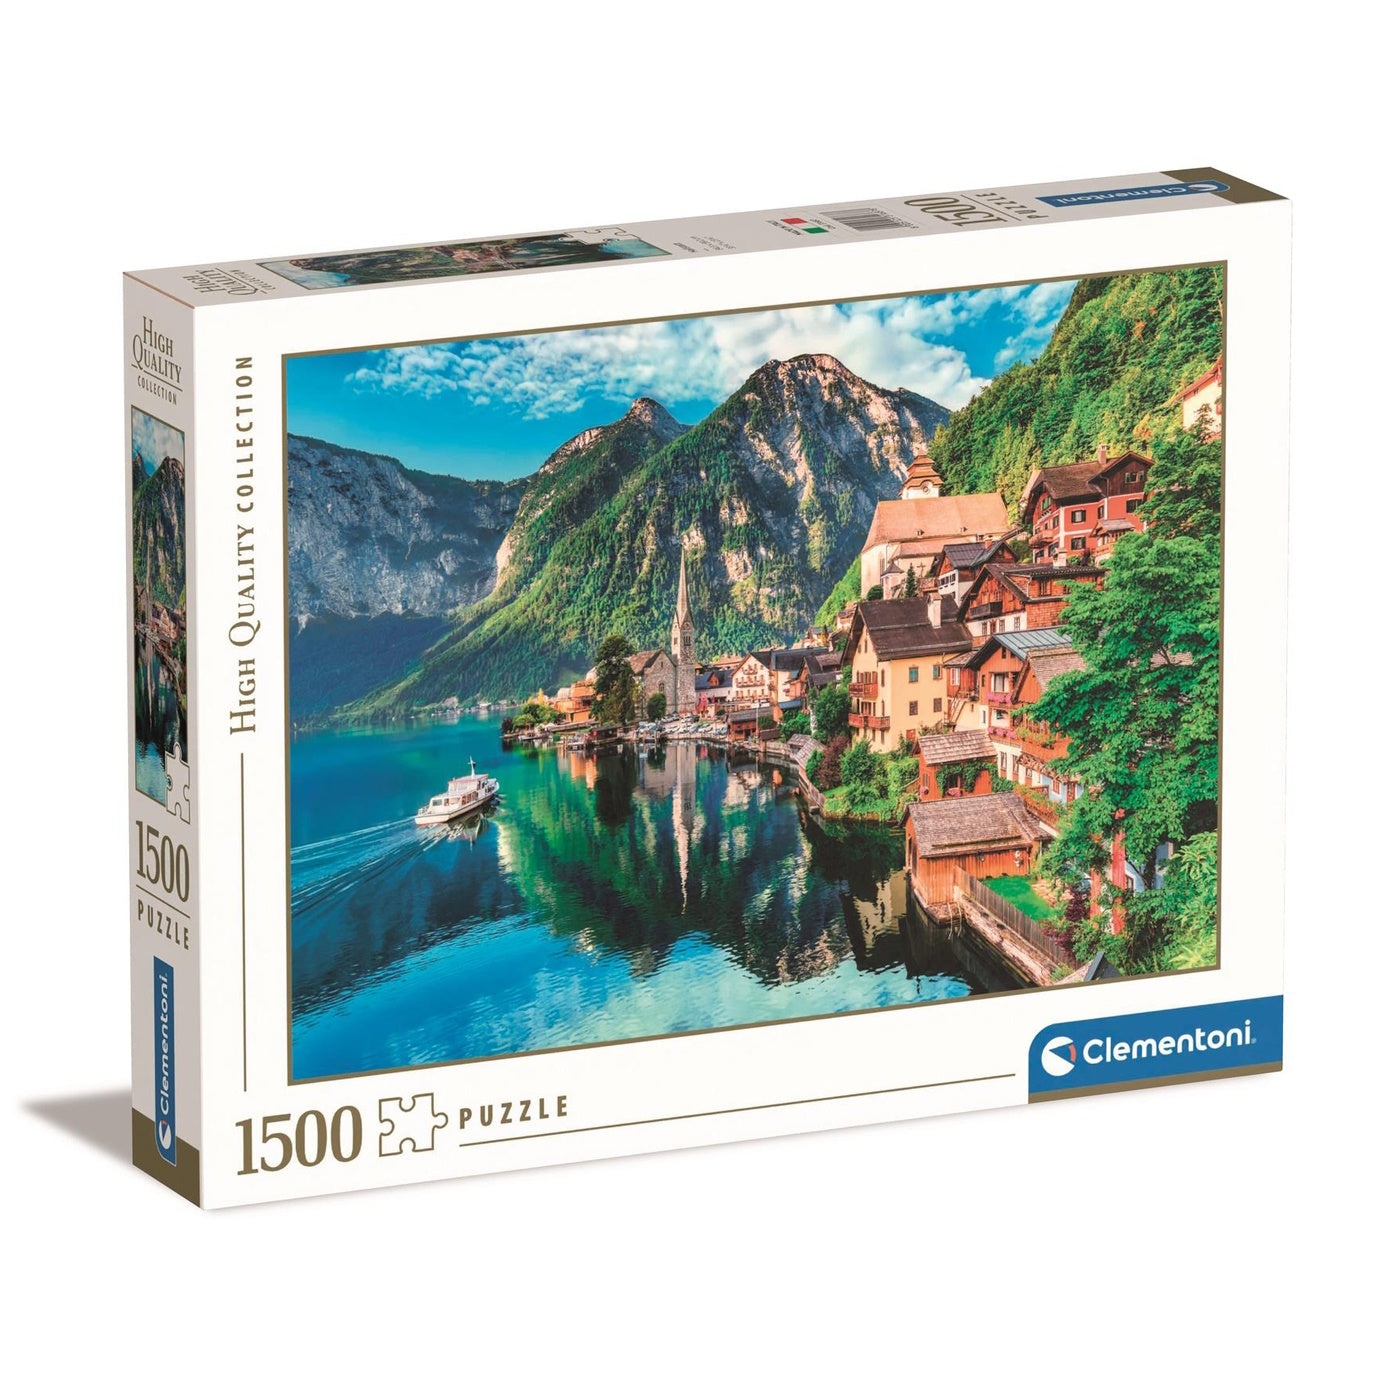 Clementoni 1500 Piece Jigsaw Puzzle - Halstatt